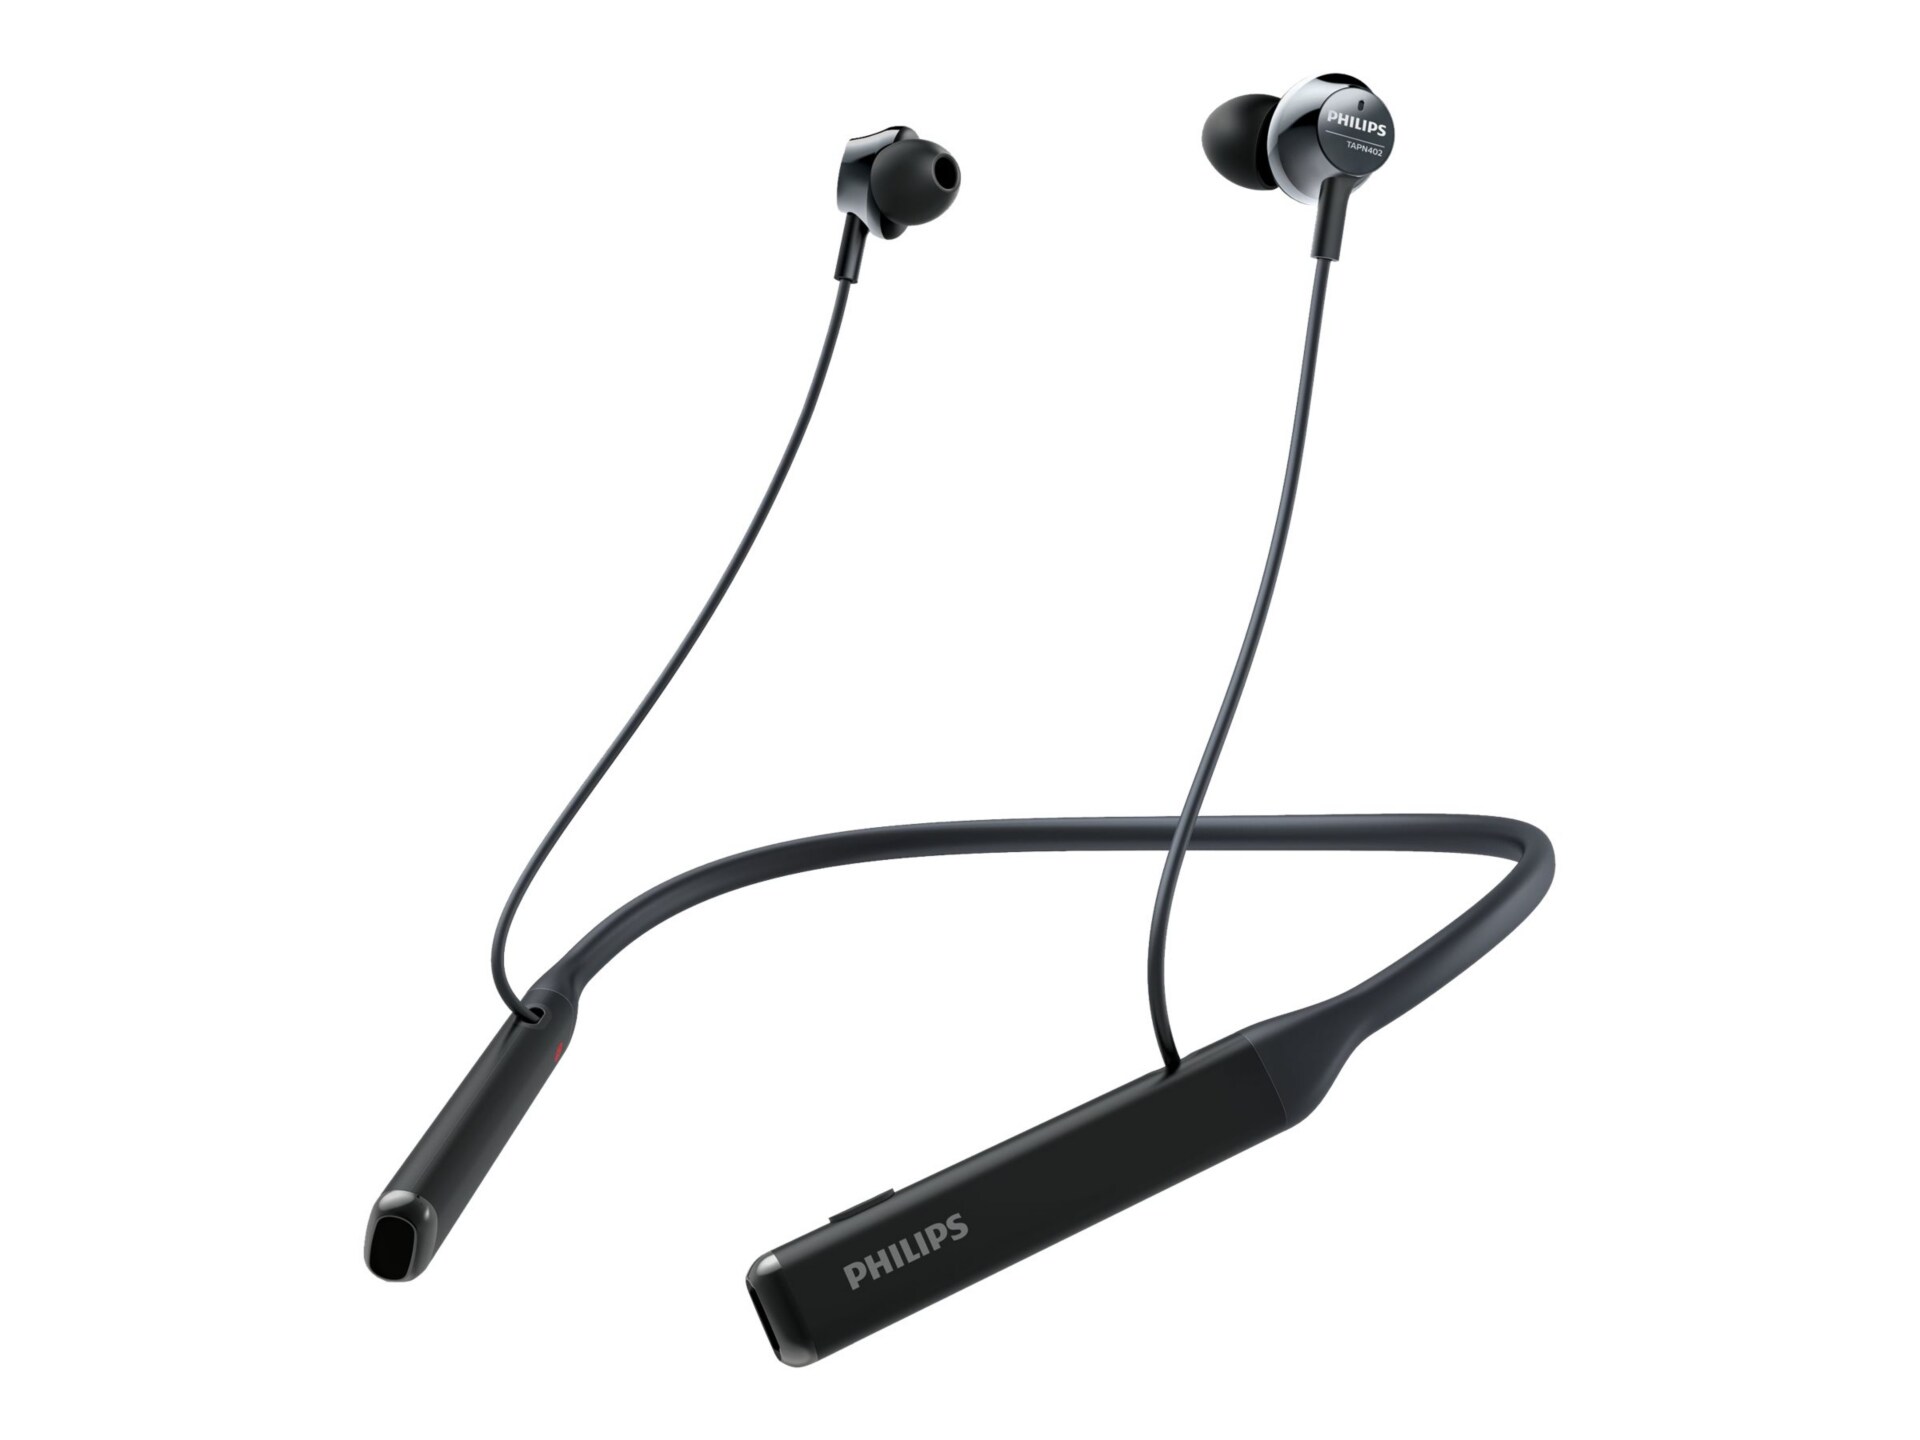 black beat wireless neckband earphones with mic